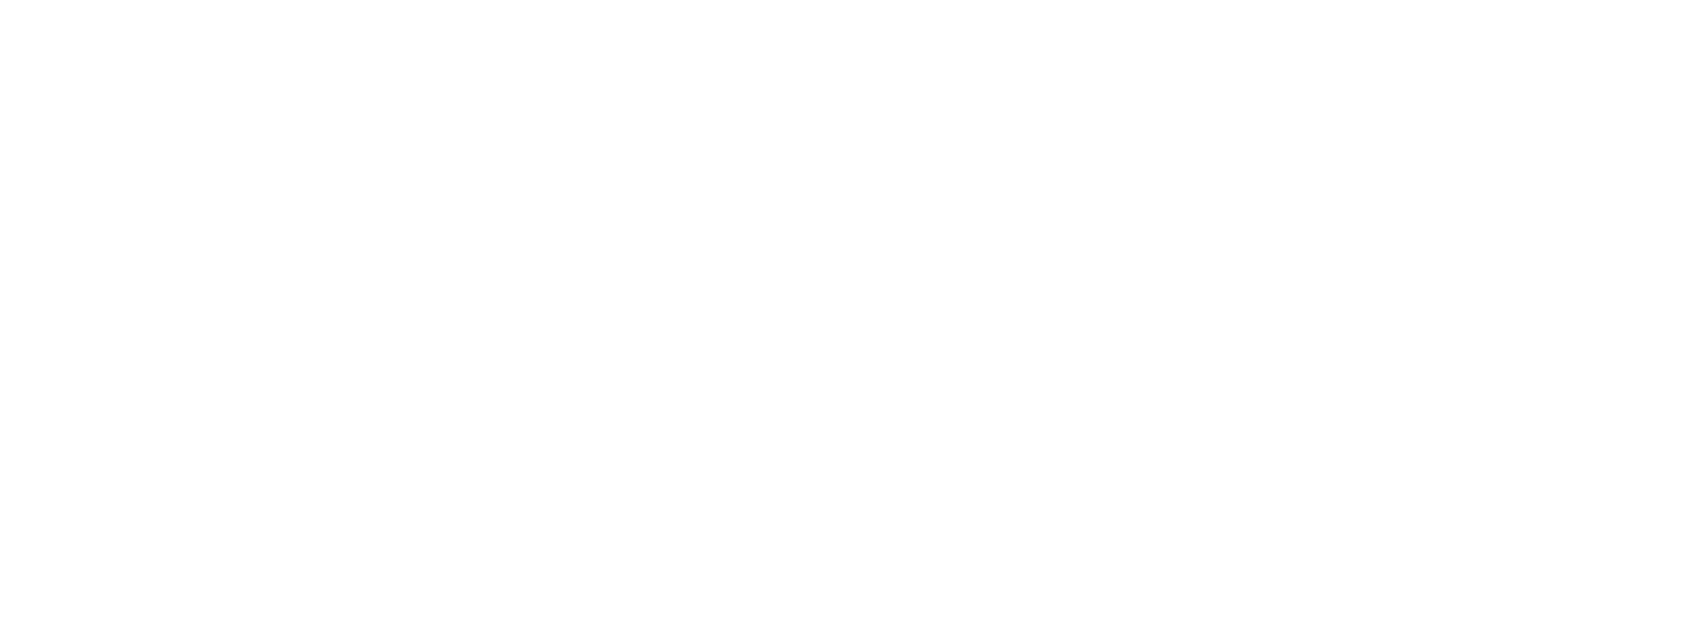 Lasher Design Architecture Firm